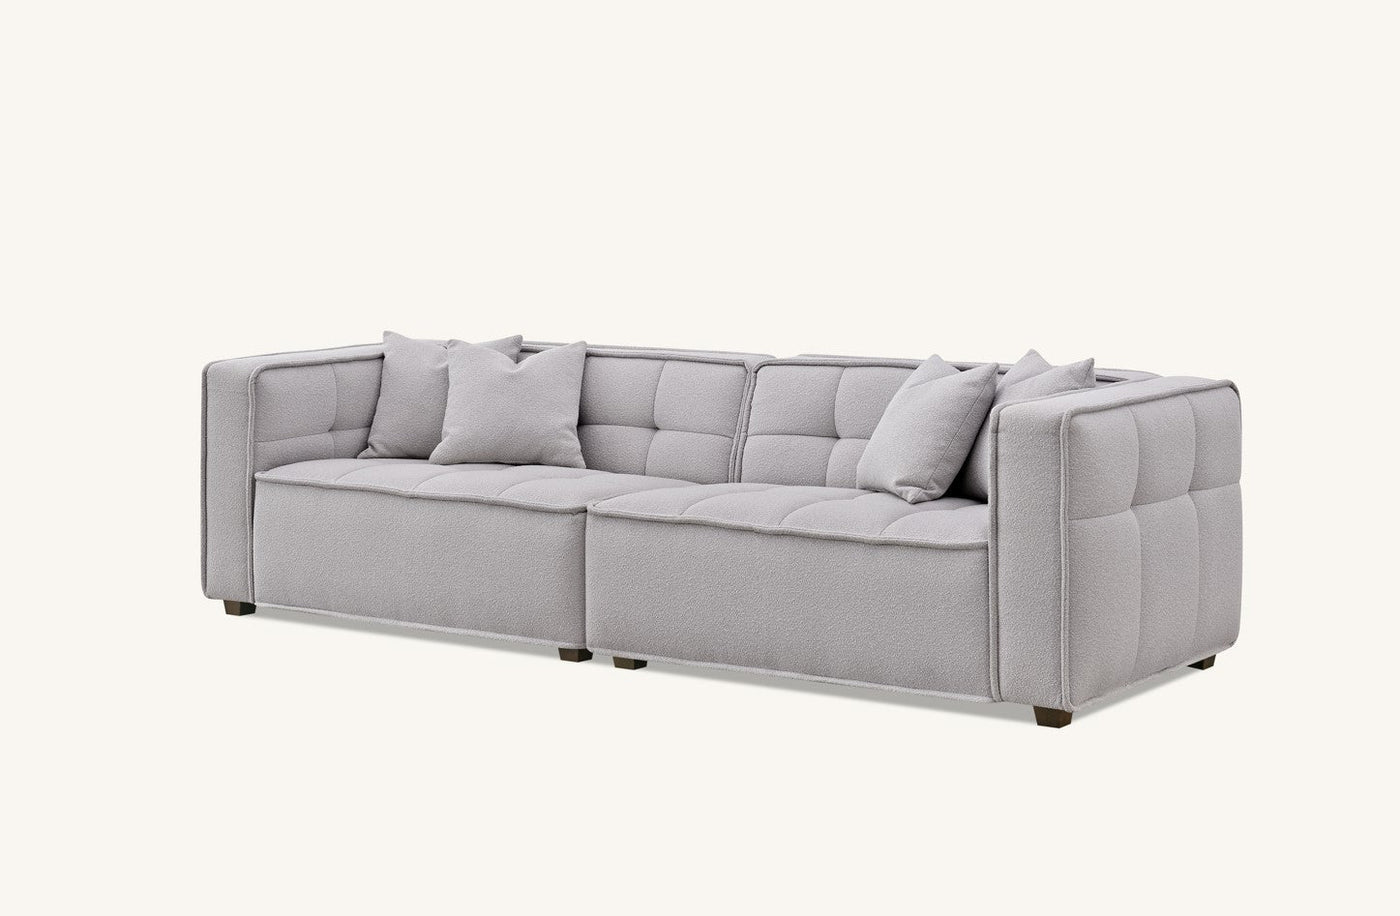 The Breva Putty Grey Boucle 4 Seater Premium Sofa Putty Grey Boucle Fabric